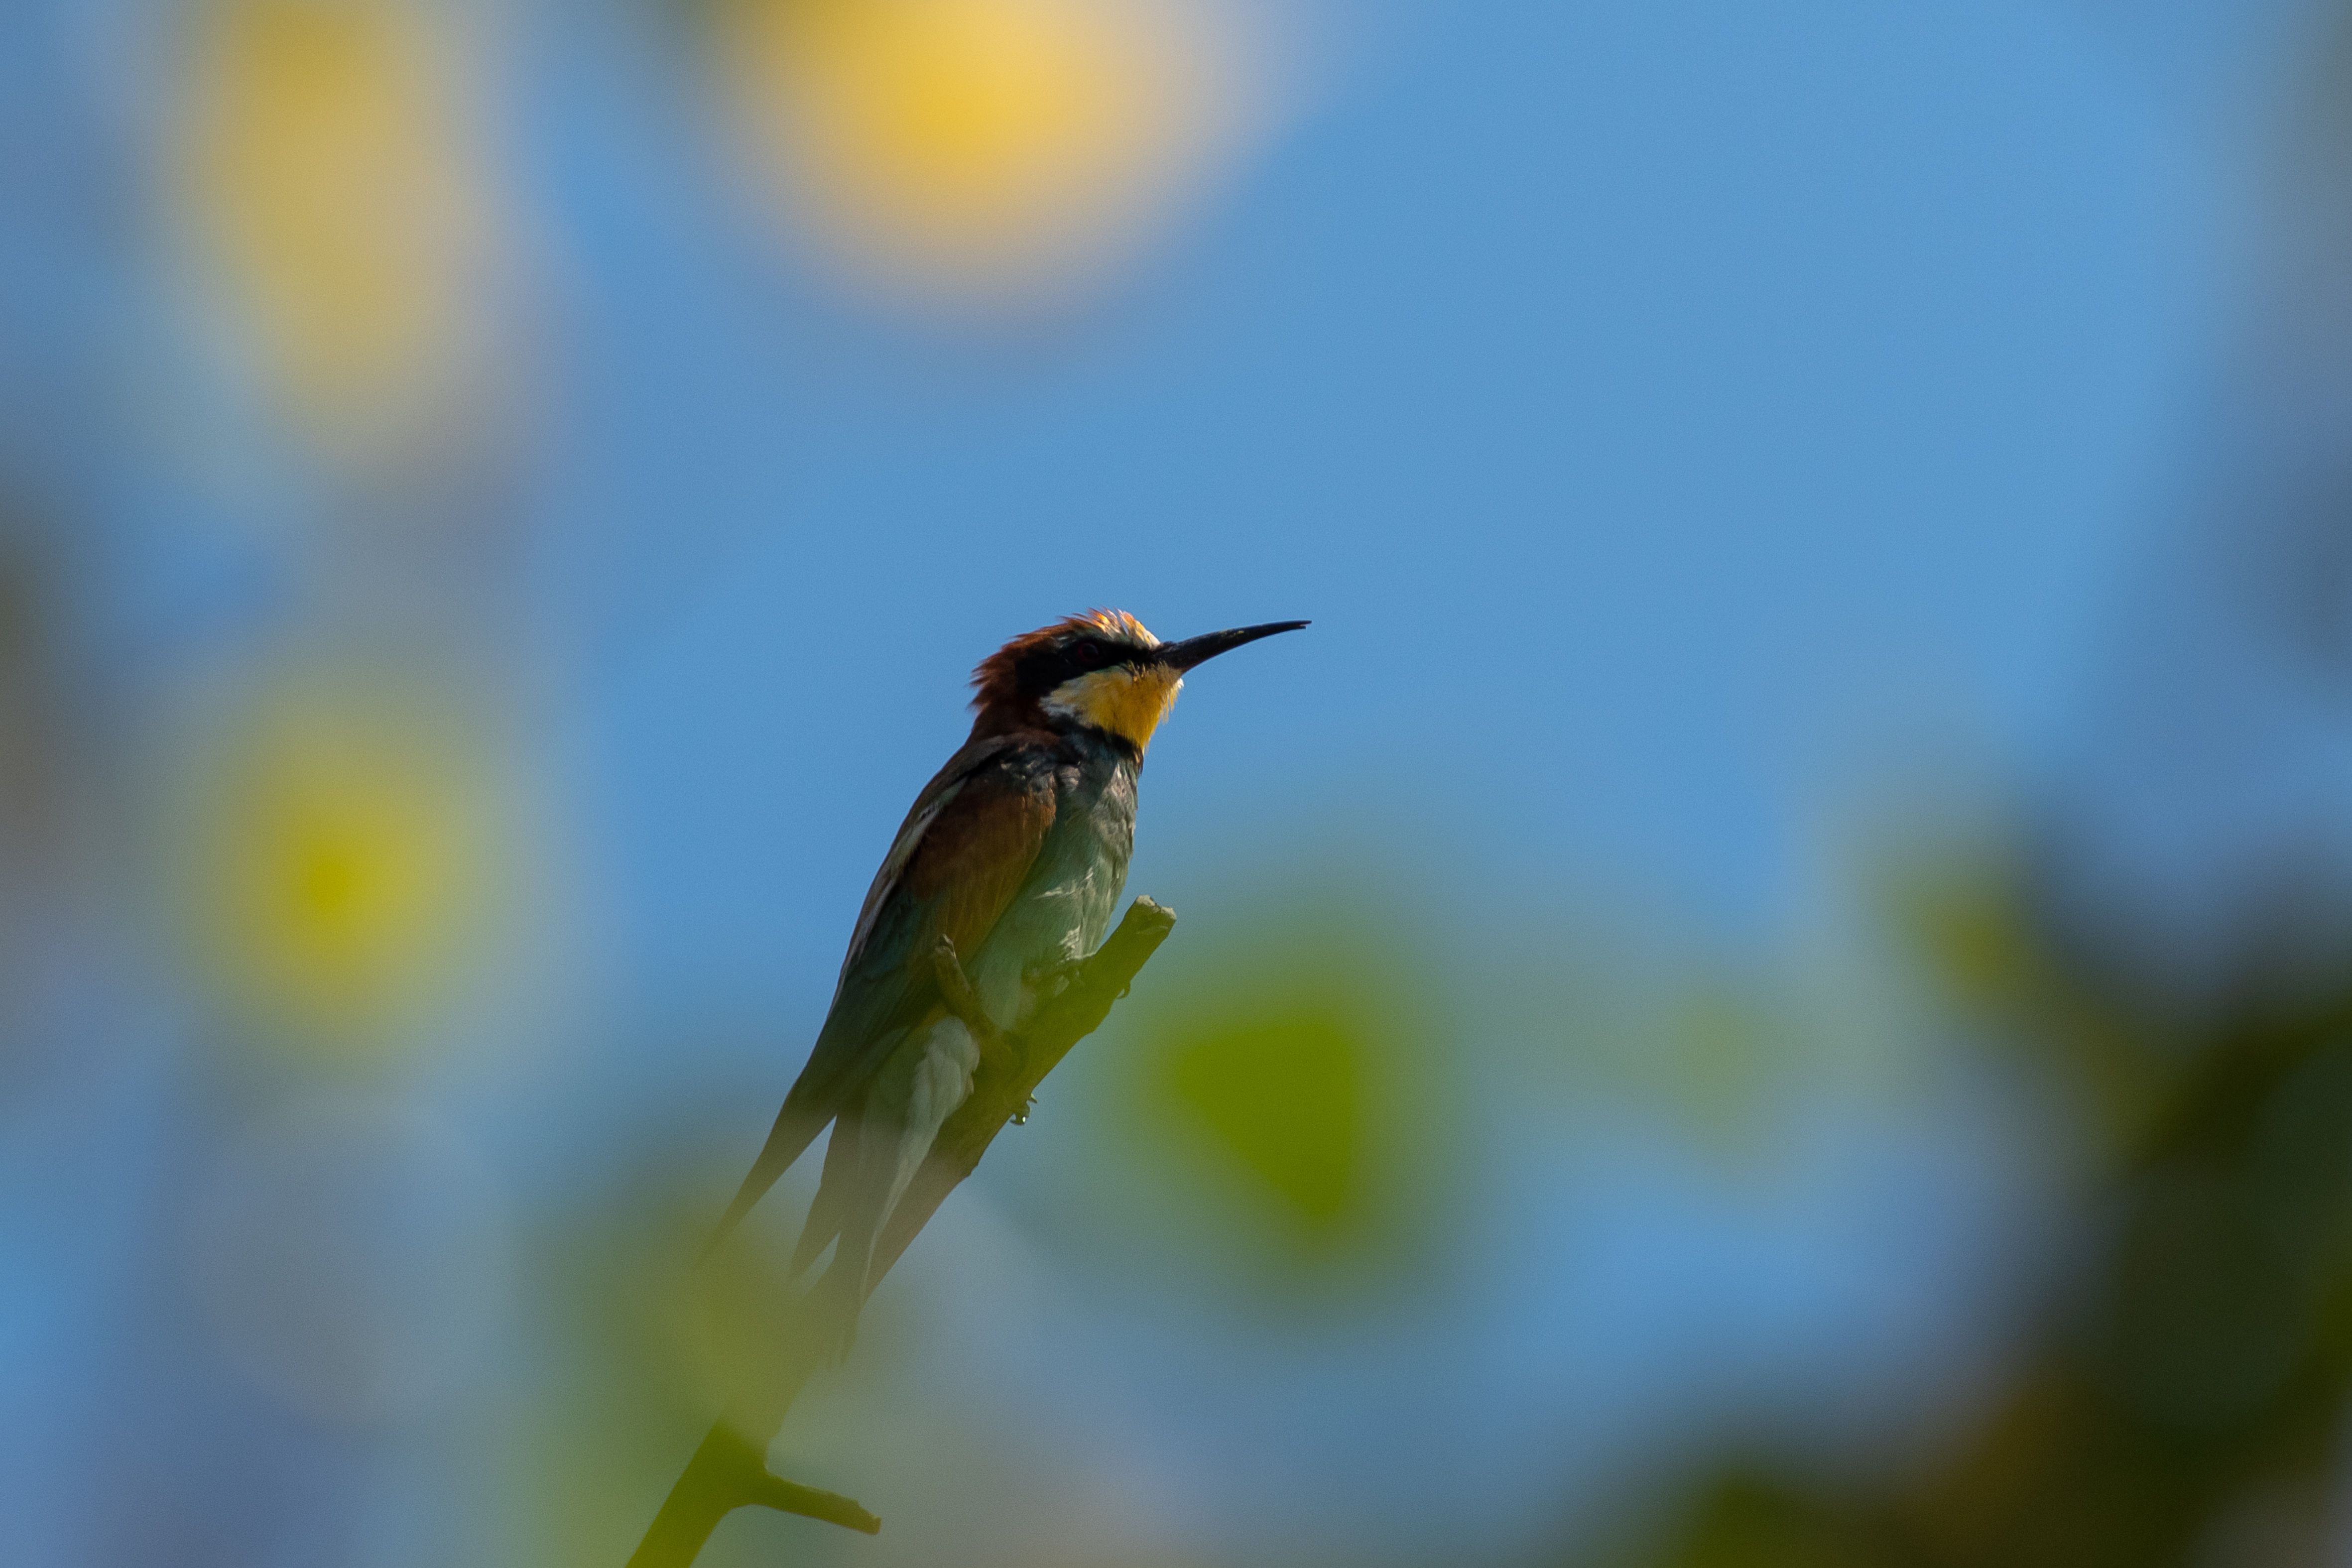 European bee-eater, Merops apiaster, volgograd, rusia, wildlife, bird, birds, birdswatching, , Сторчилов Павел